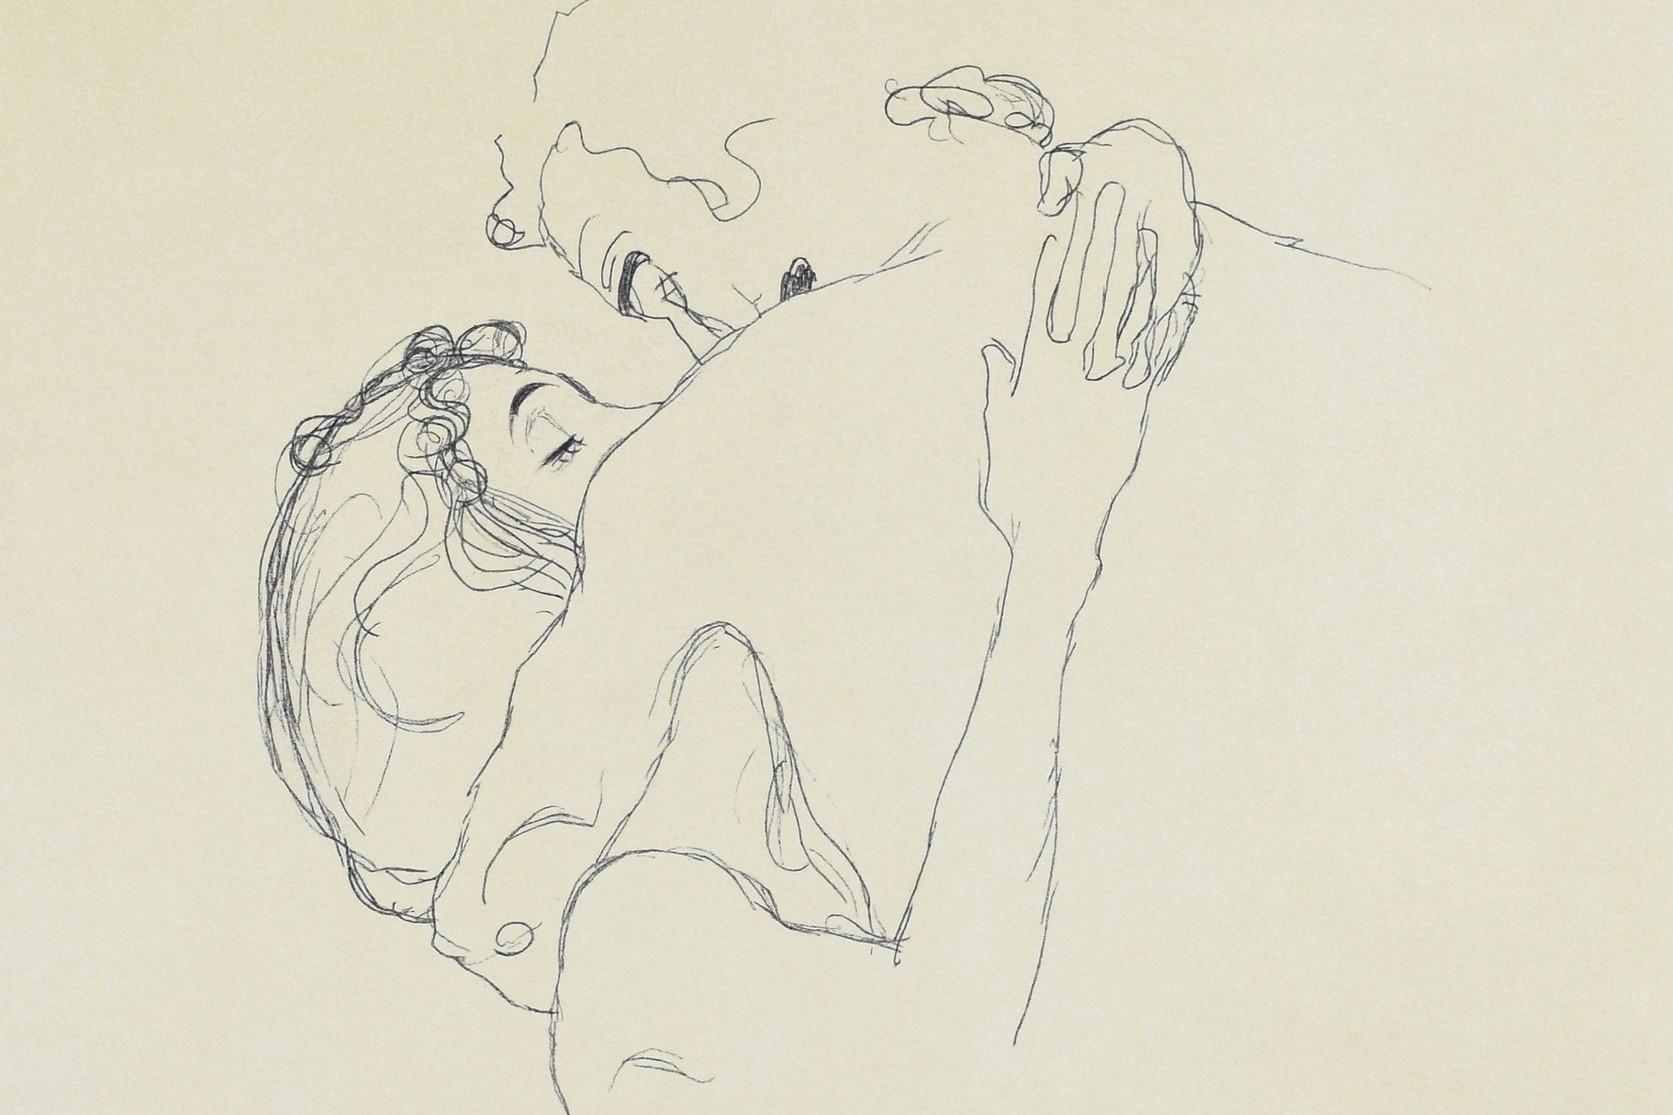 Gutav KLIMT | Lithographie | Les amoureux, Lovers, 1904/1905 (Upper bodies of an embracing couple)